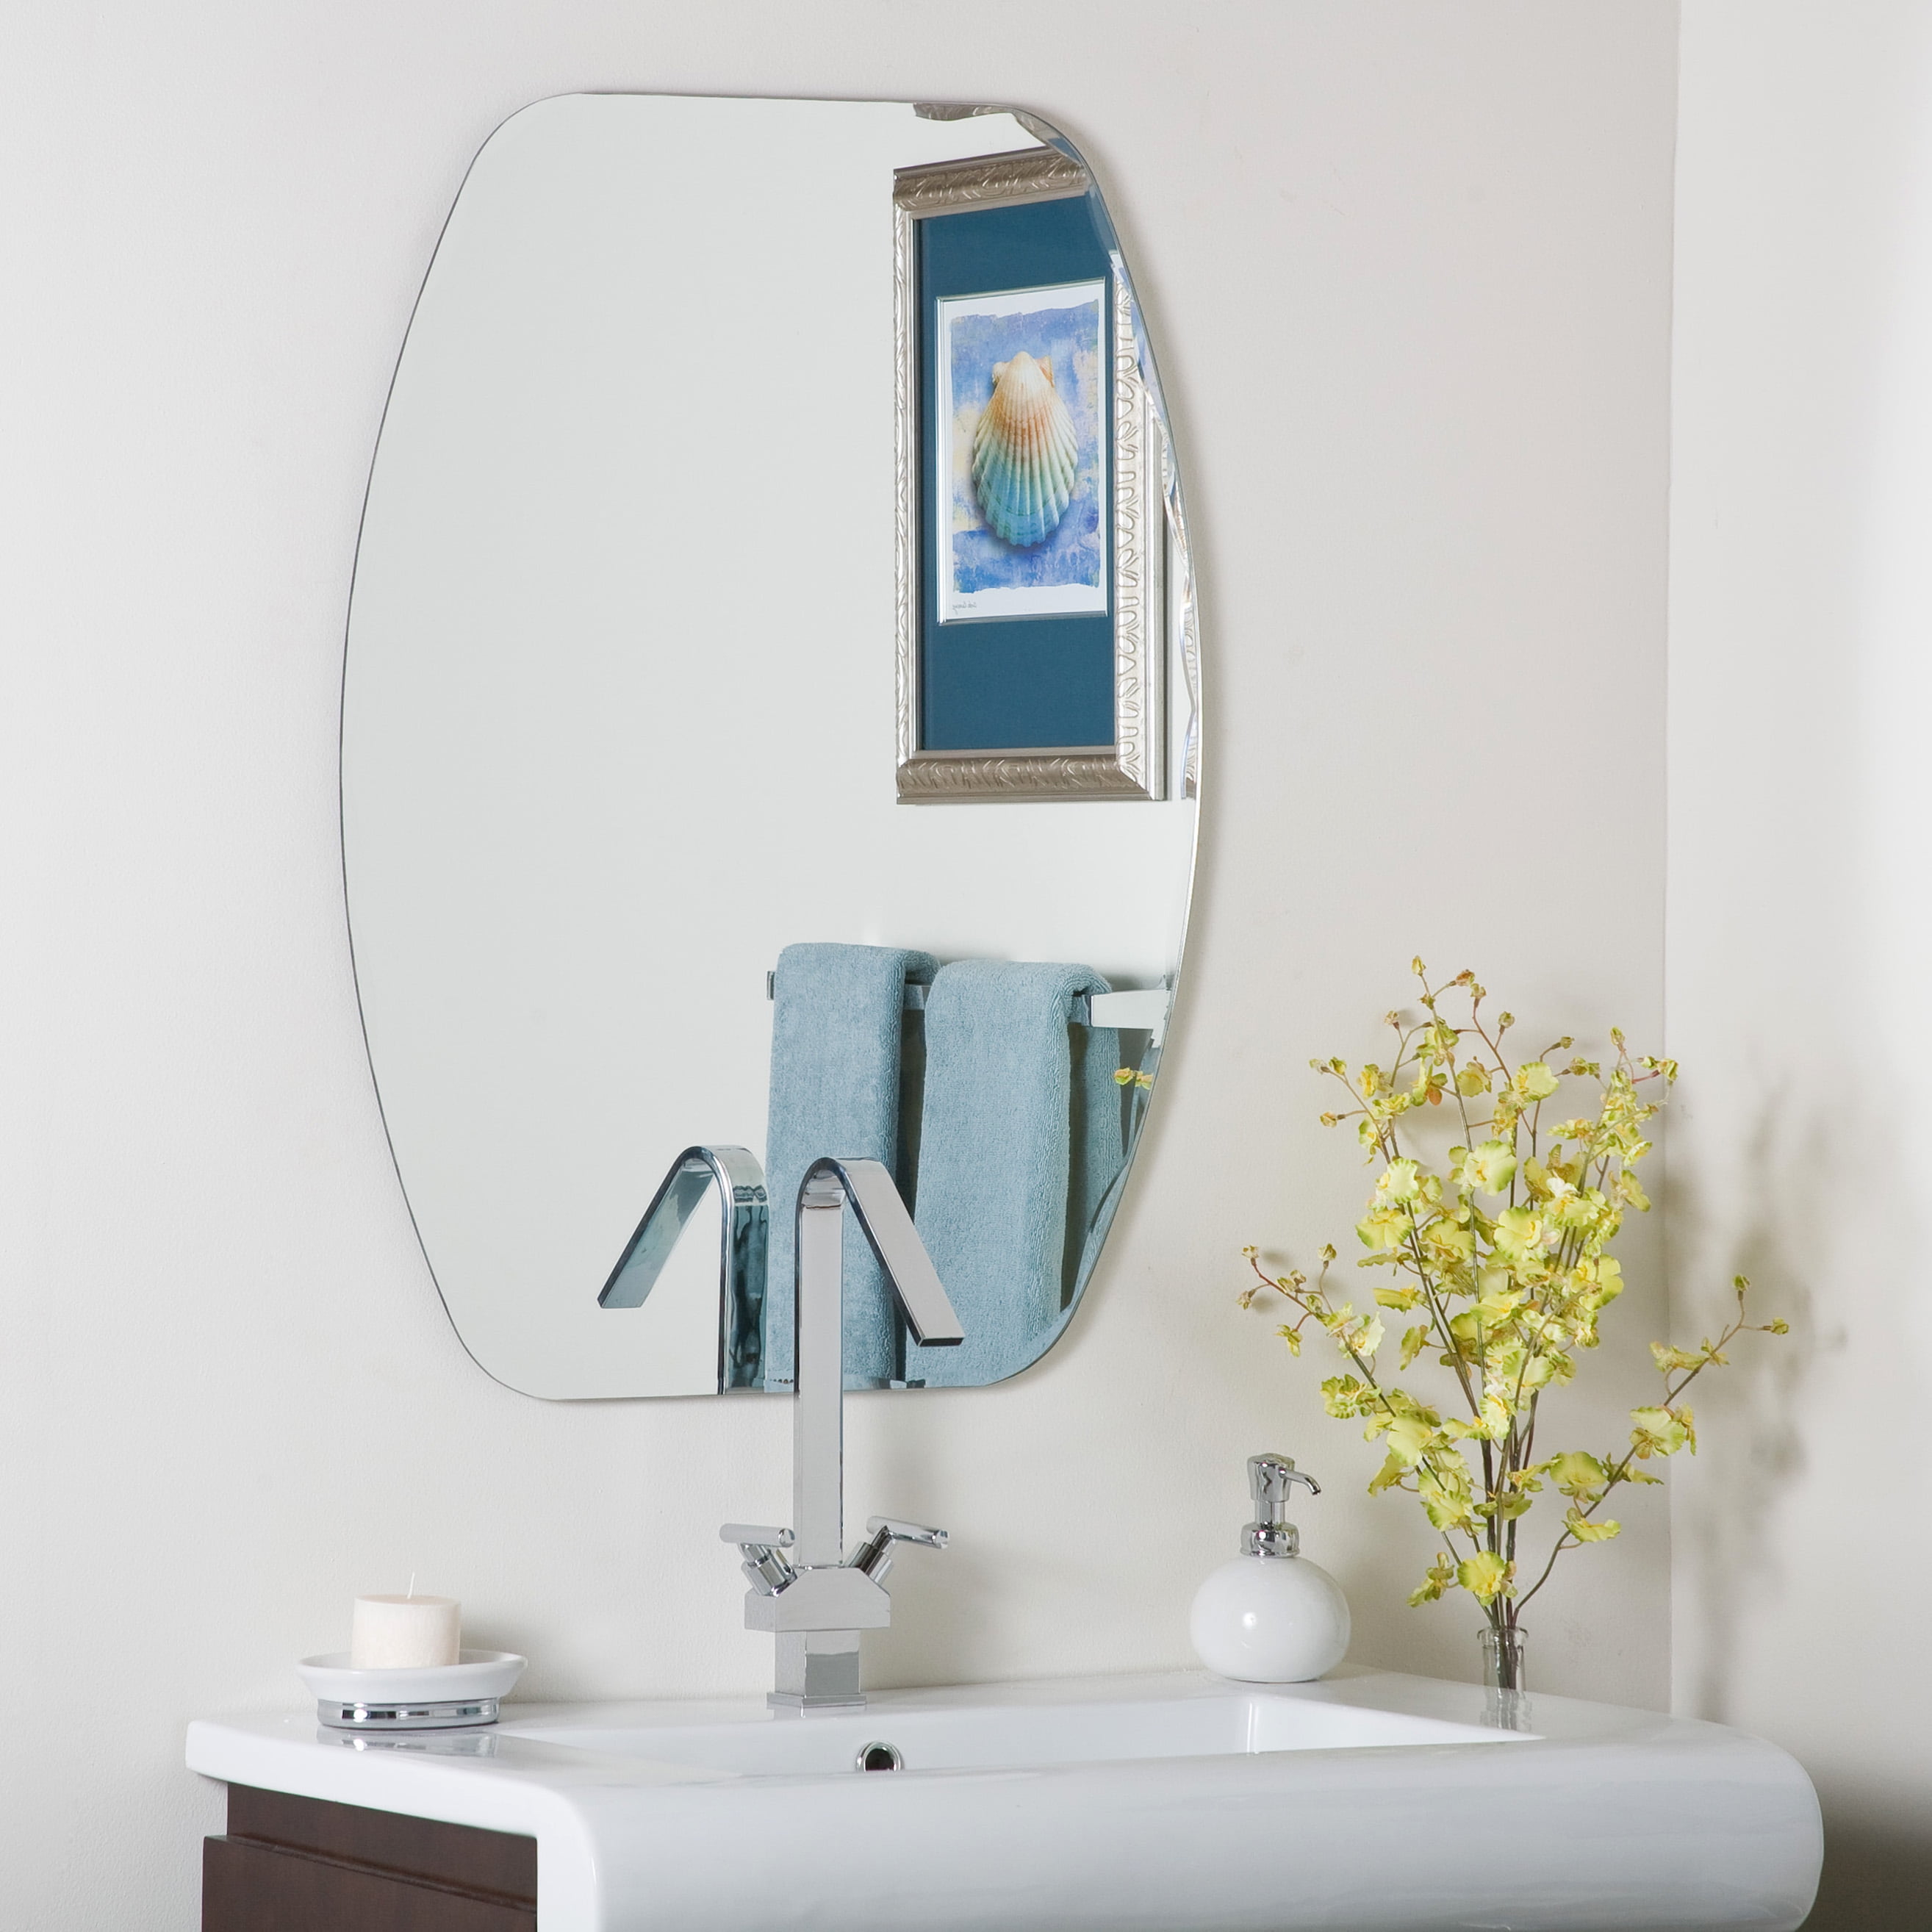 Large 31 5 X 23 6 Oval Scallop Beveled, Frameless Oval Beveled Bathroom Mirror